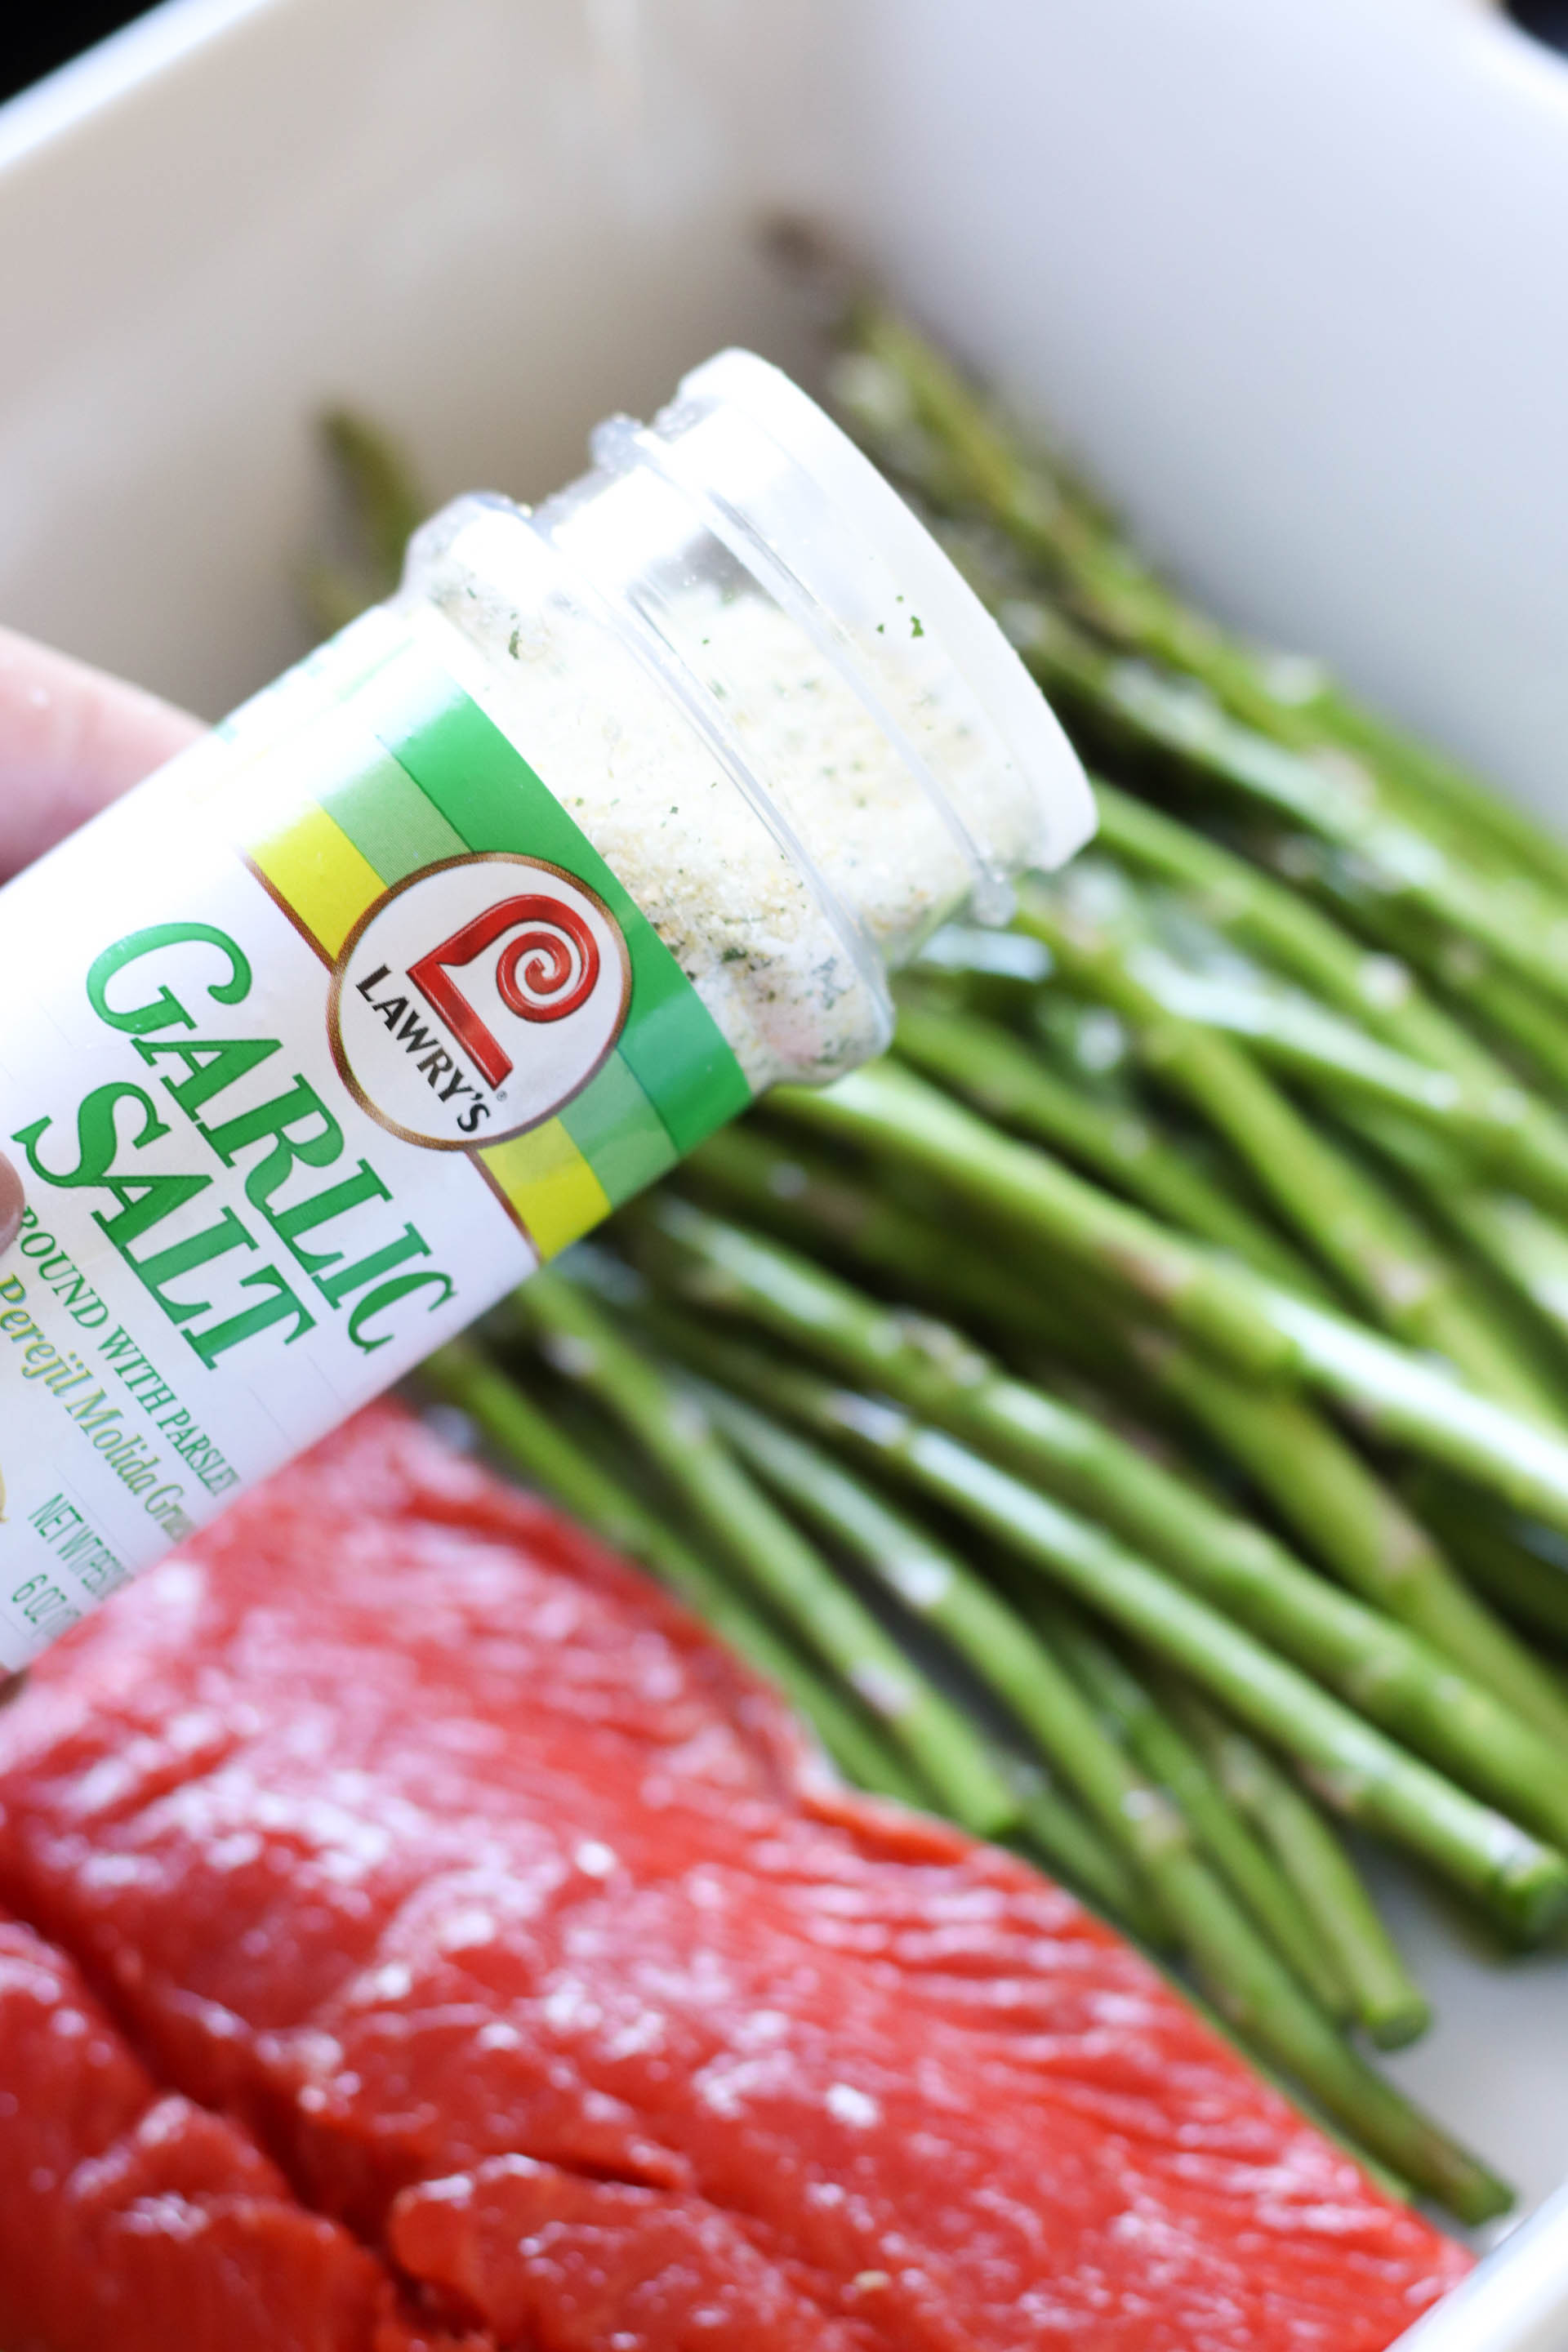 garlic salt sprinkled on raw salmon and asparagus